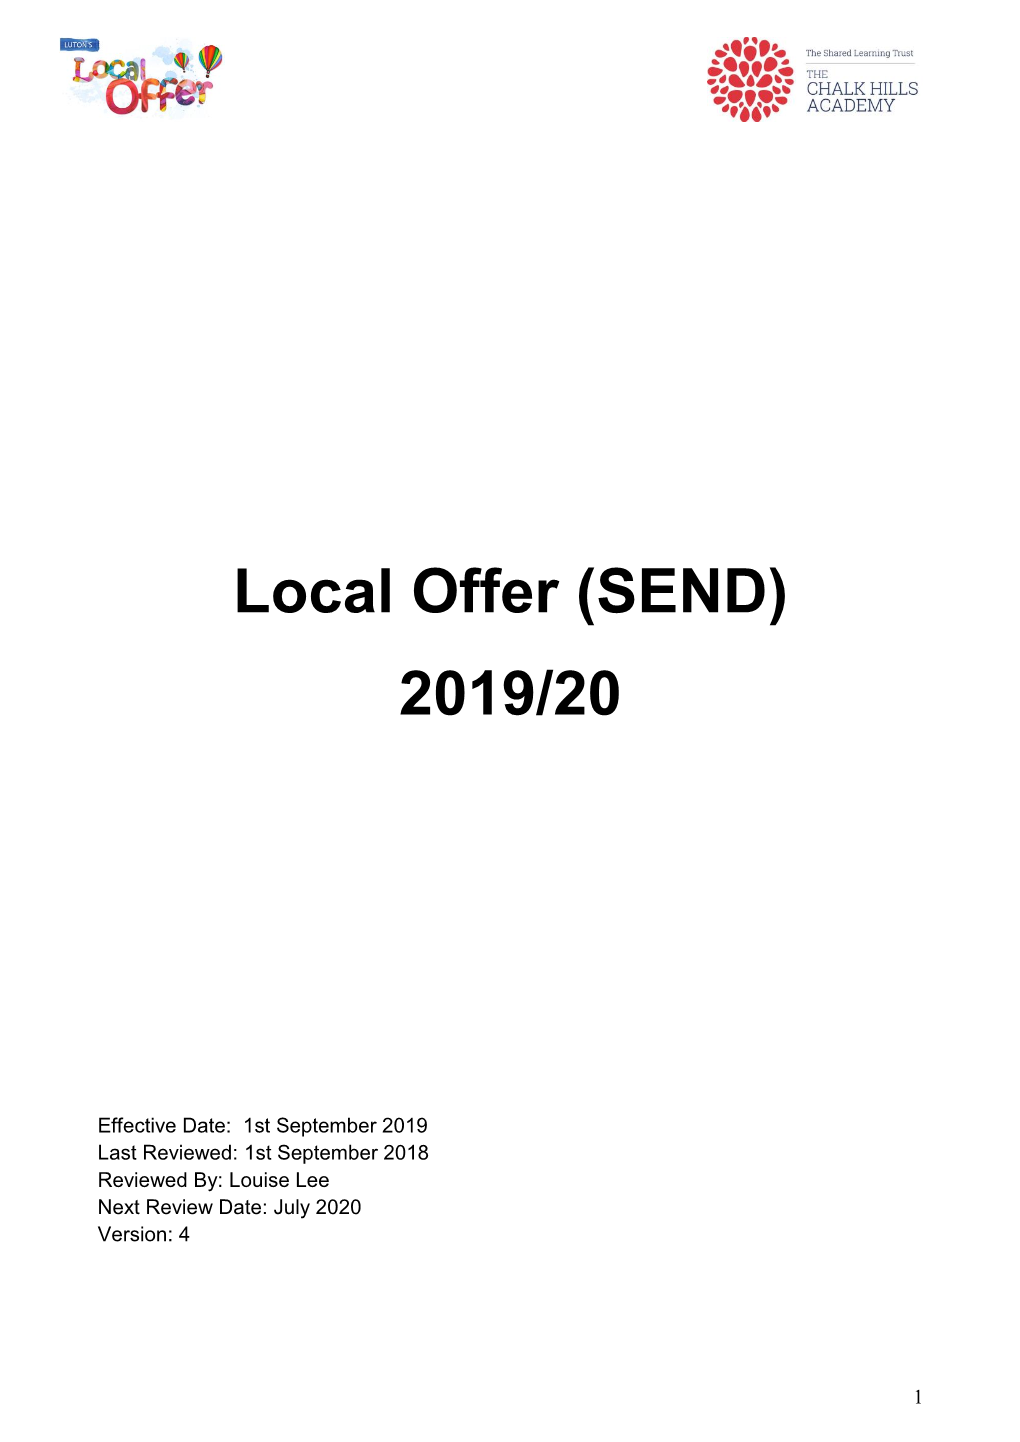 Local Offer (SEND) 2019/20